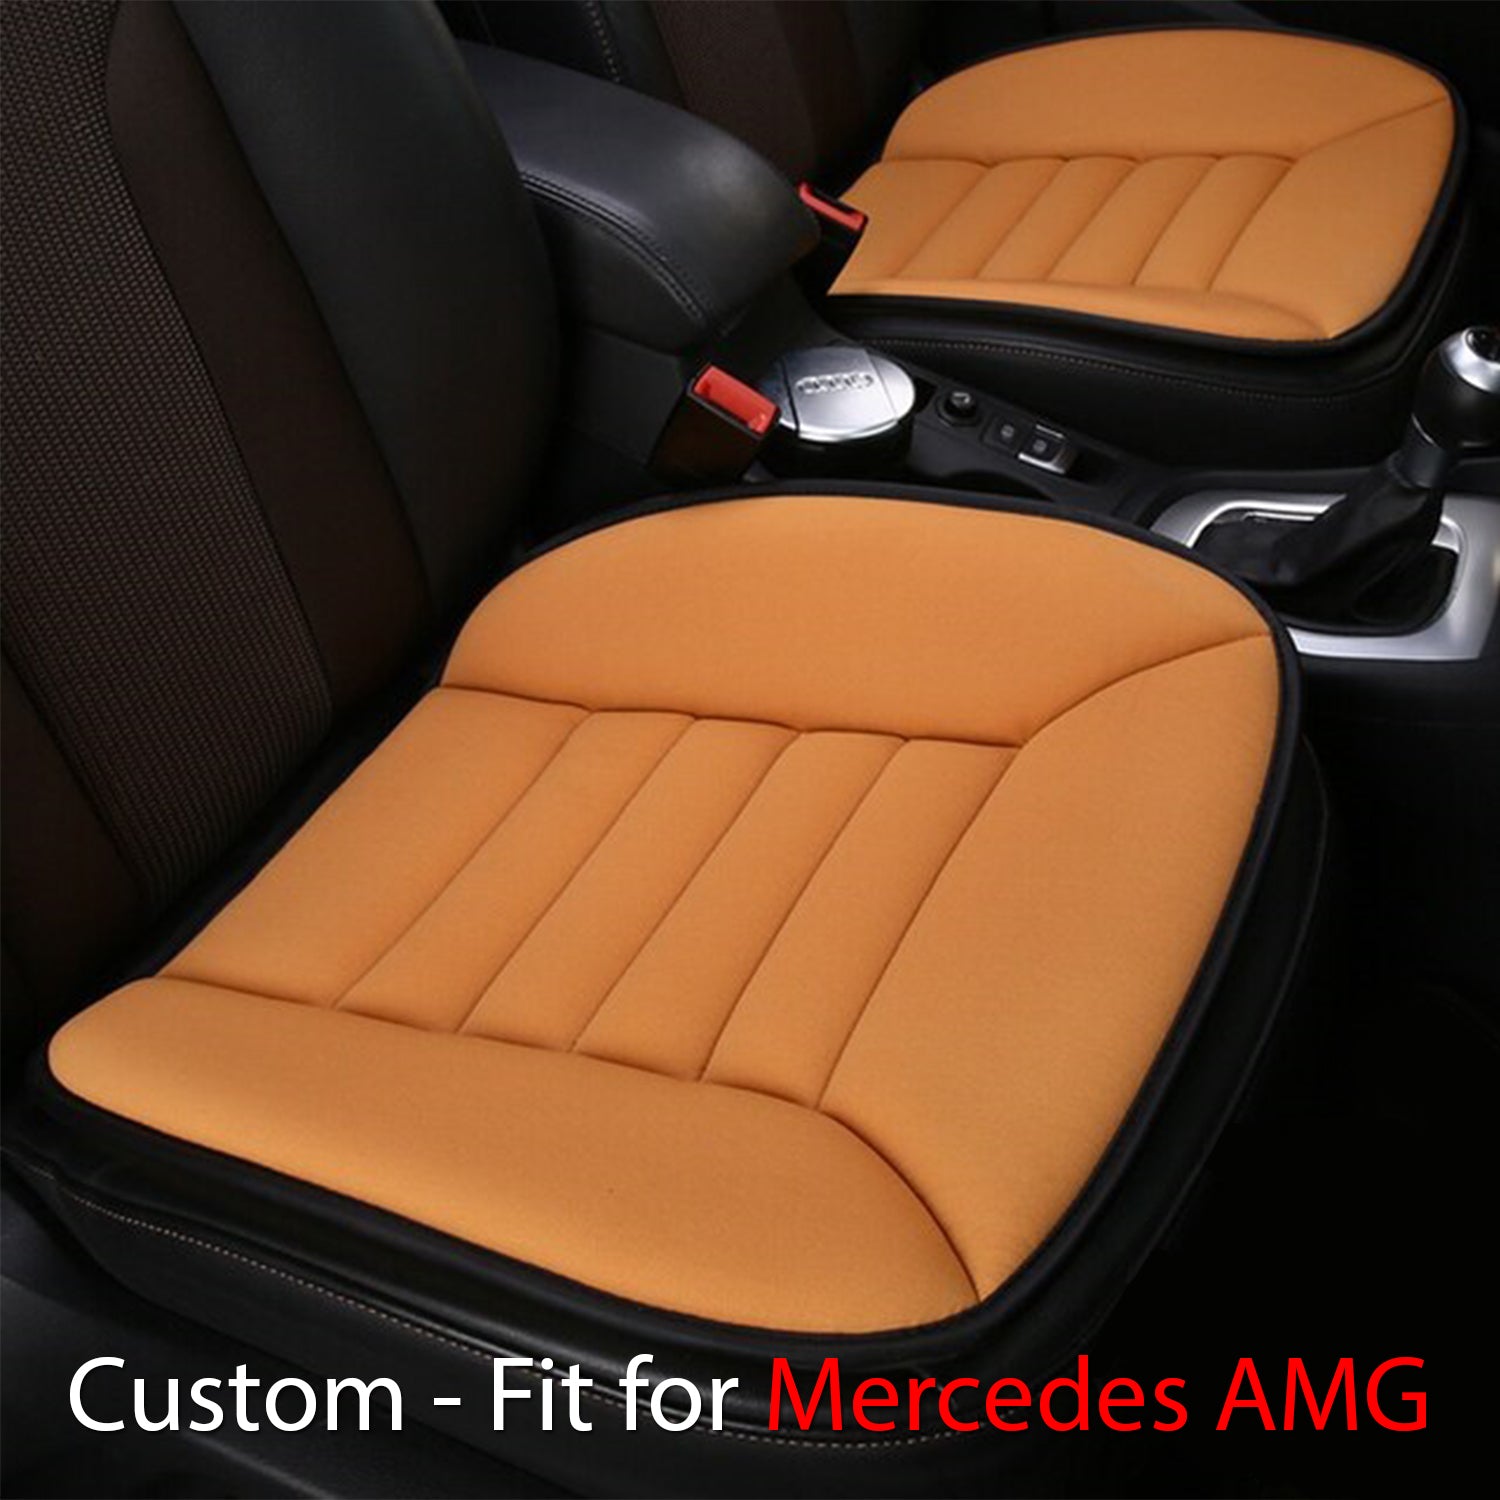 Car Seat Cushion with 1.2inch Comfort Memory Foam, Custom-Fit For Car, Seat Cushion for Car and Office Chair DLLM247